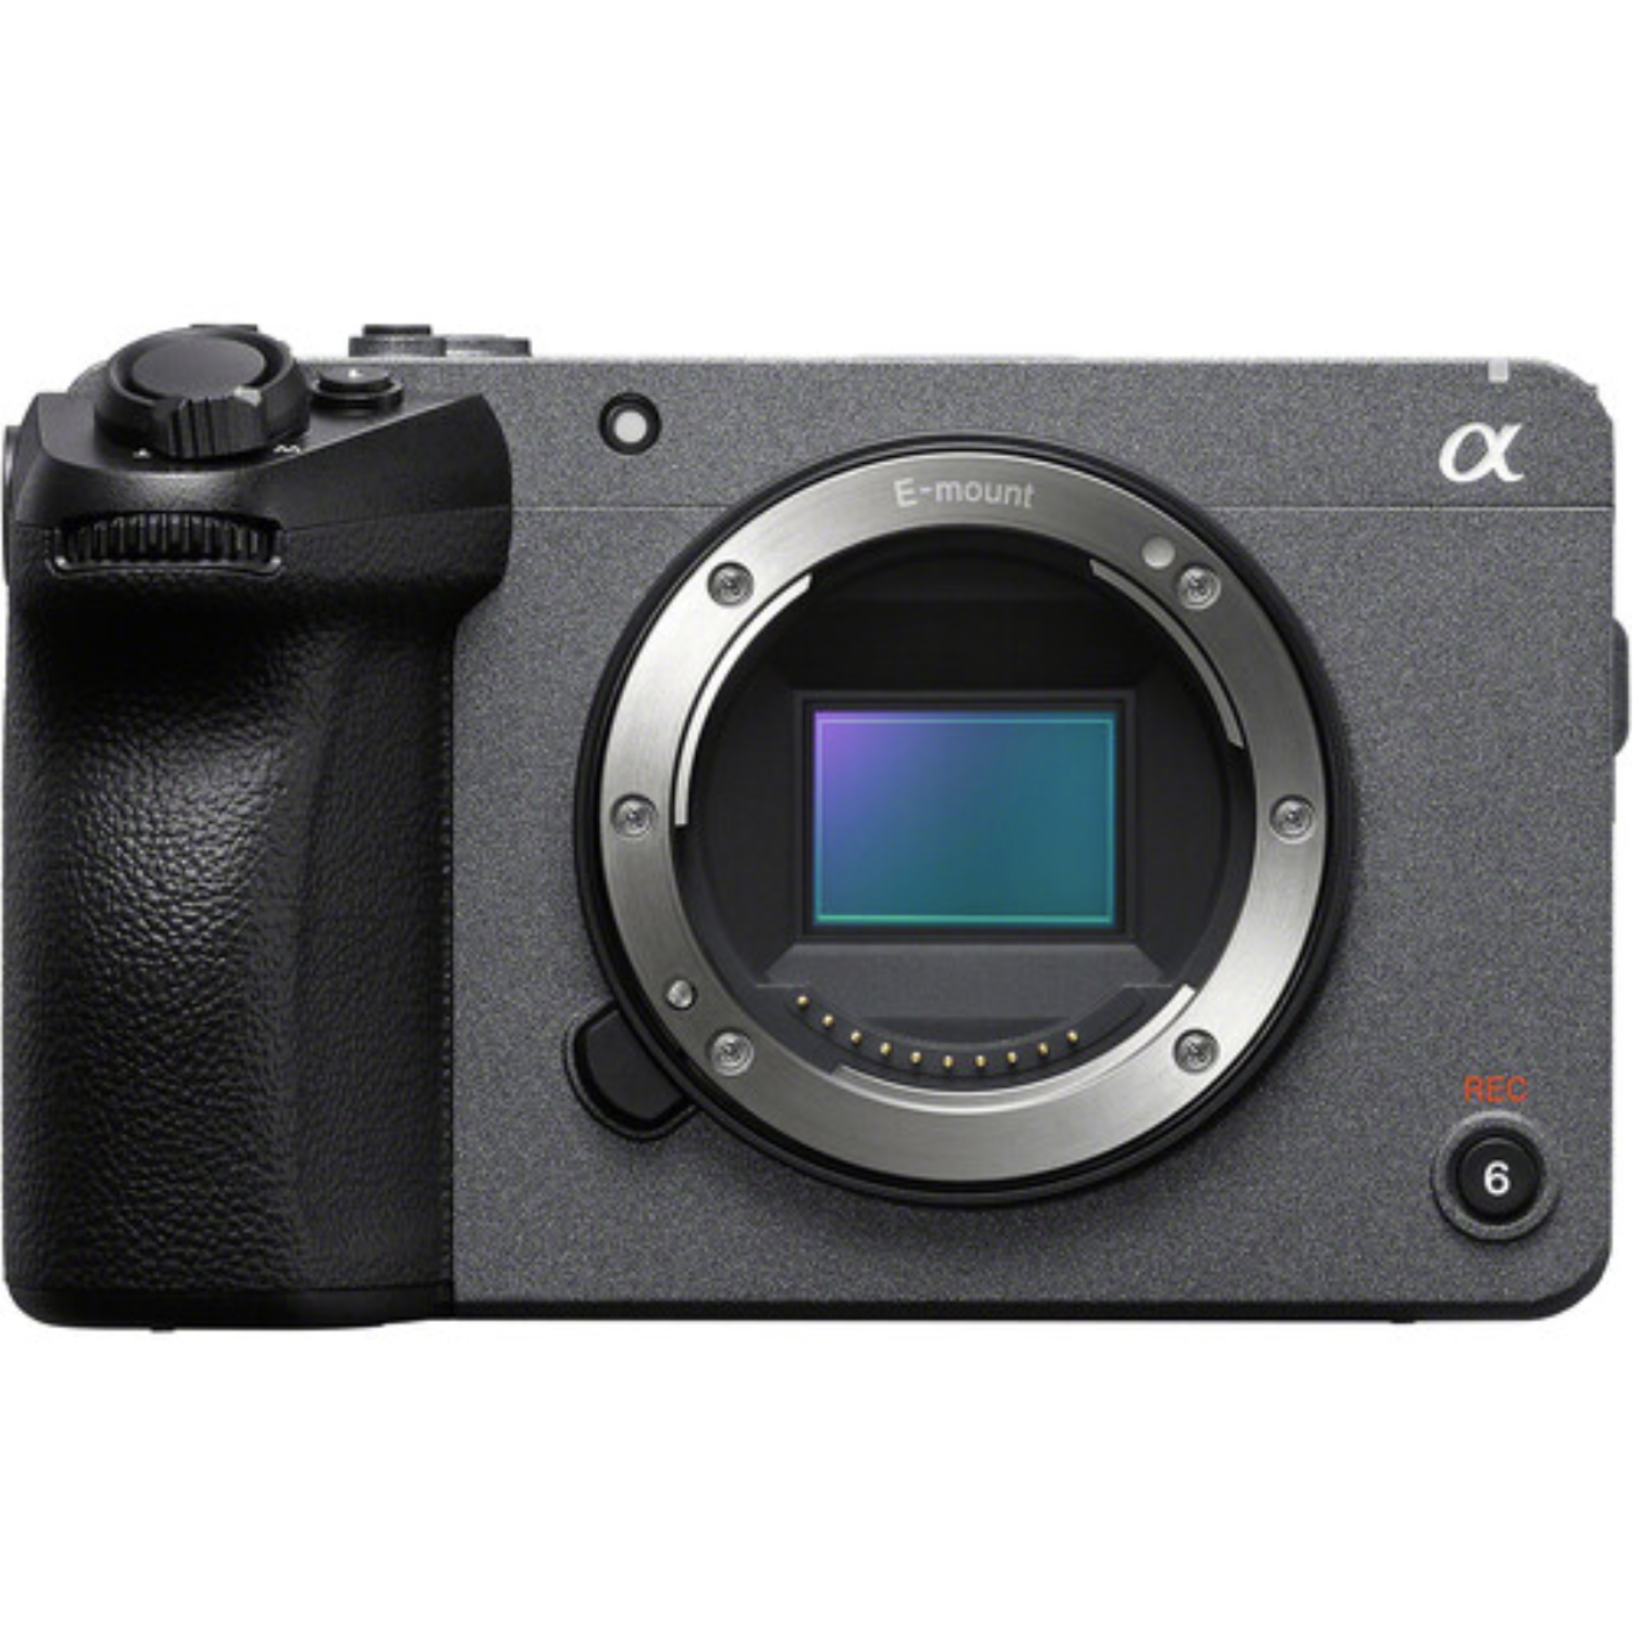 Sony Sony FX30 Digital Cinema Camera